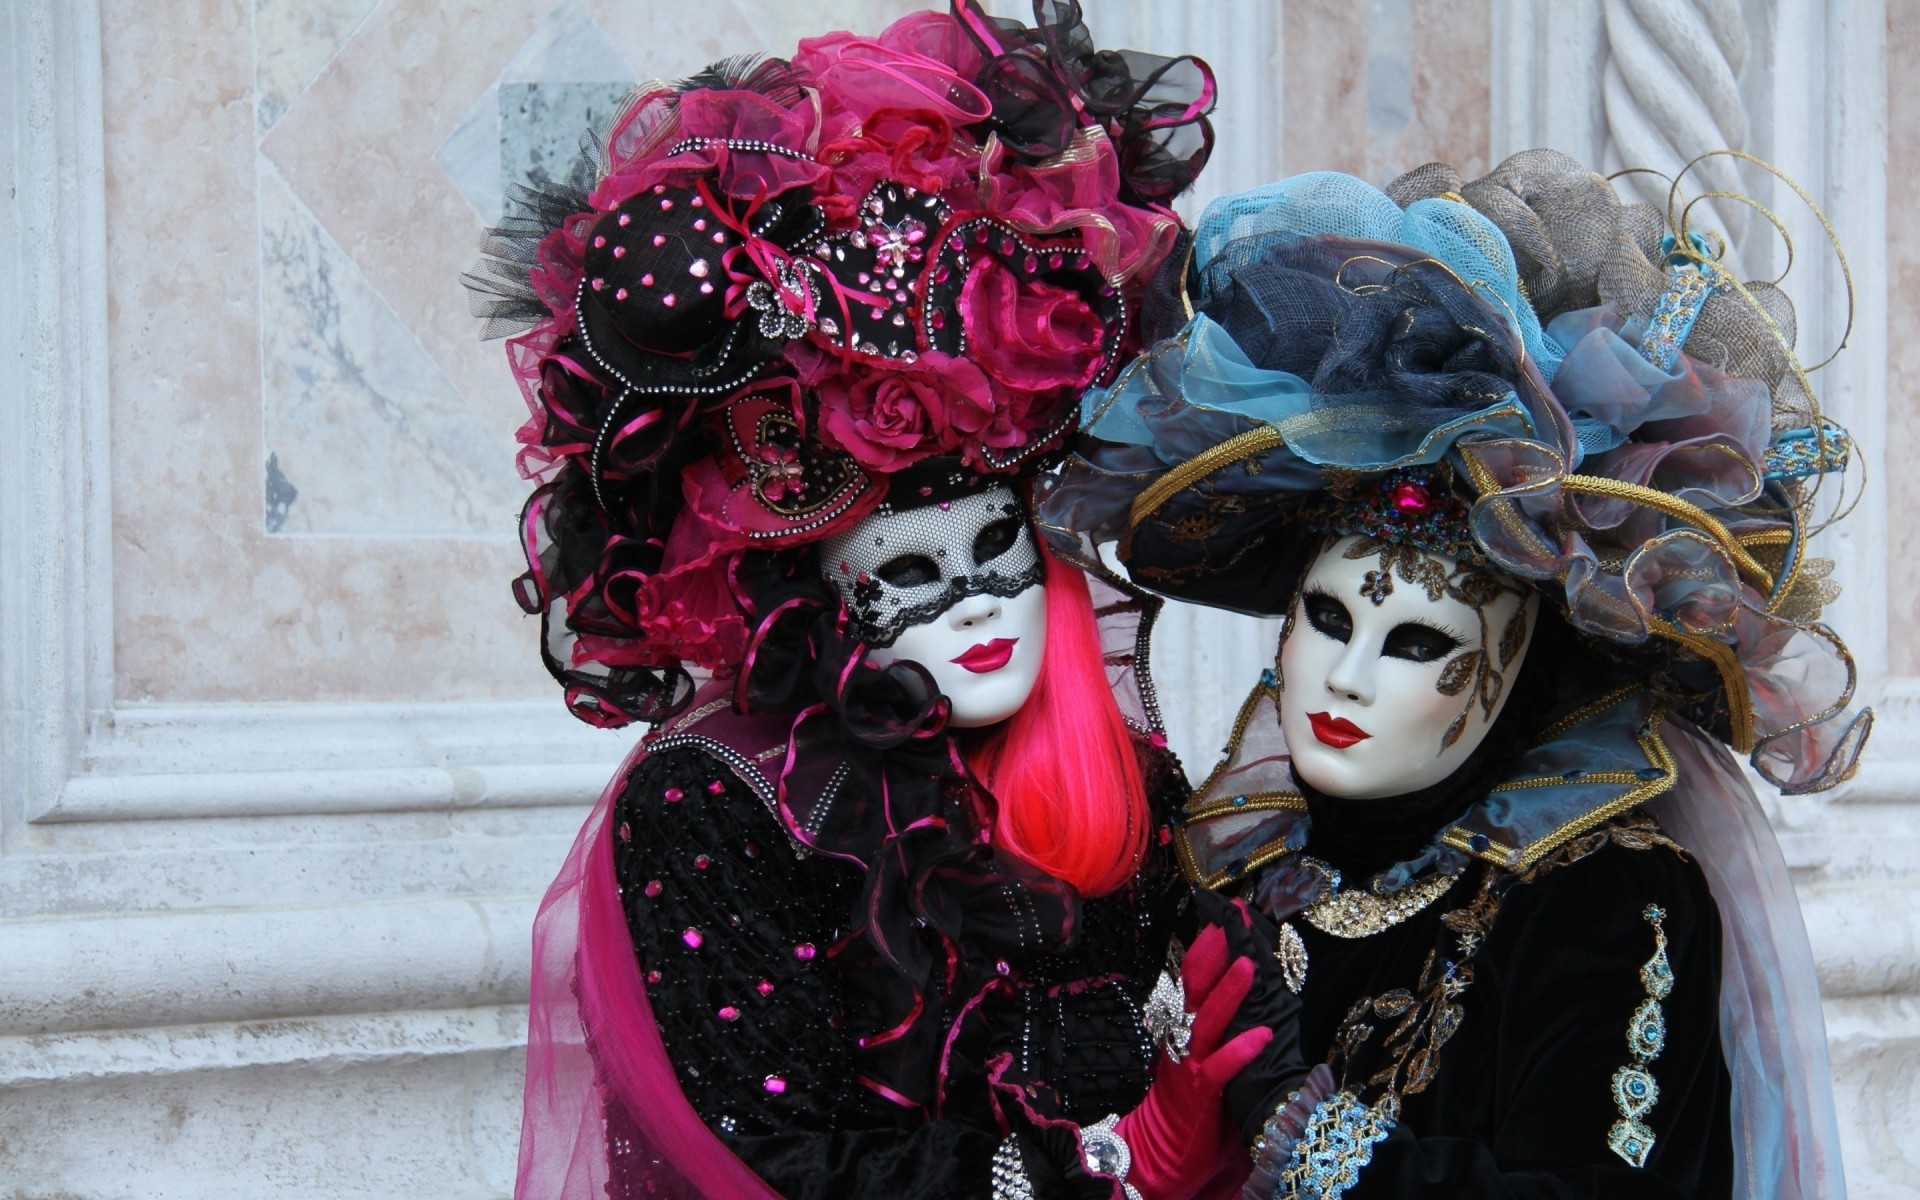 italy masquerade costume mask disguise venetian mardi gras decoration fest mystery festival celebration party halloween fantasy theater hide traditional romantic clown venice carnival venice venice mask